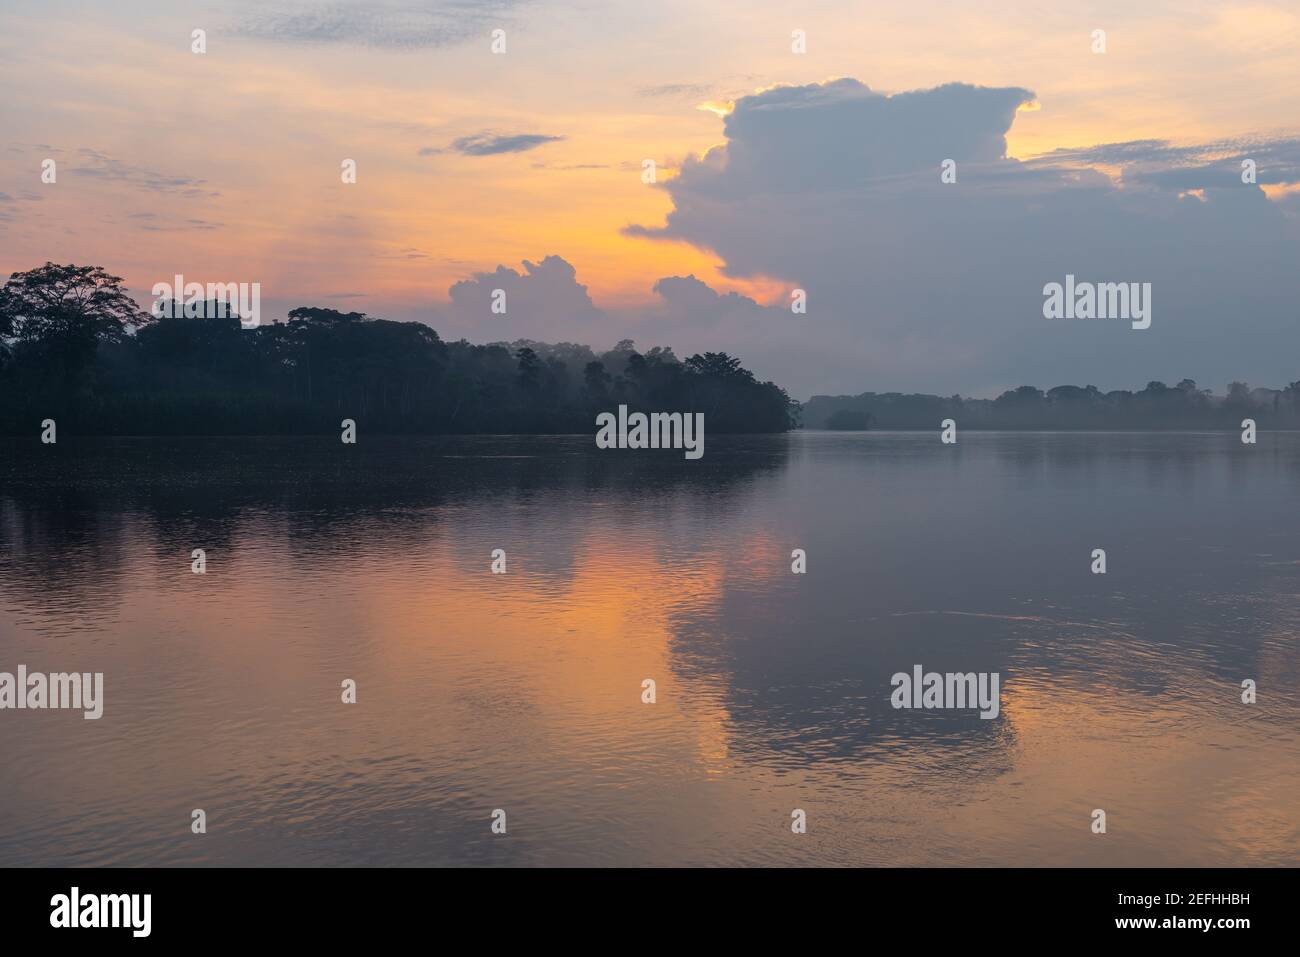 Sunrise landscape in the Amazon rainforest, Cuyabeno wildlife reserve, Ecuador. Stock Photo